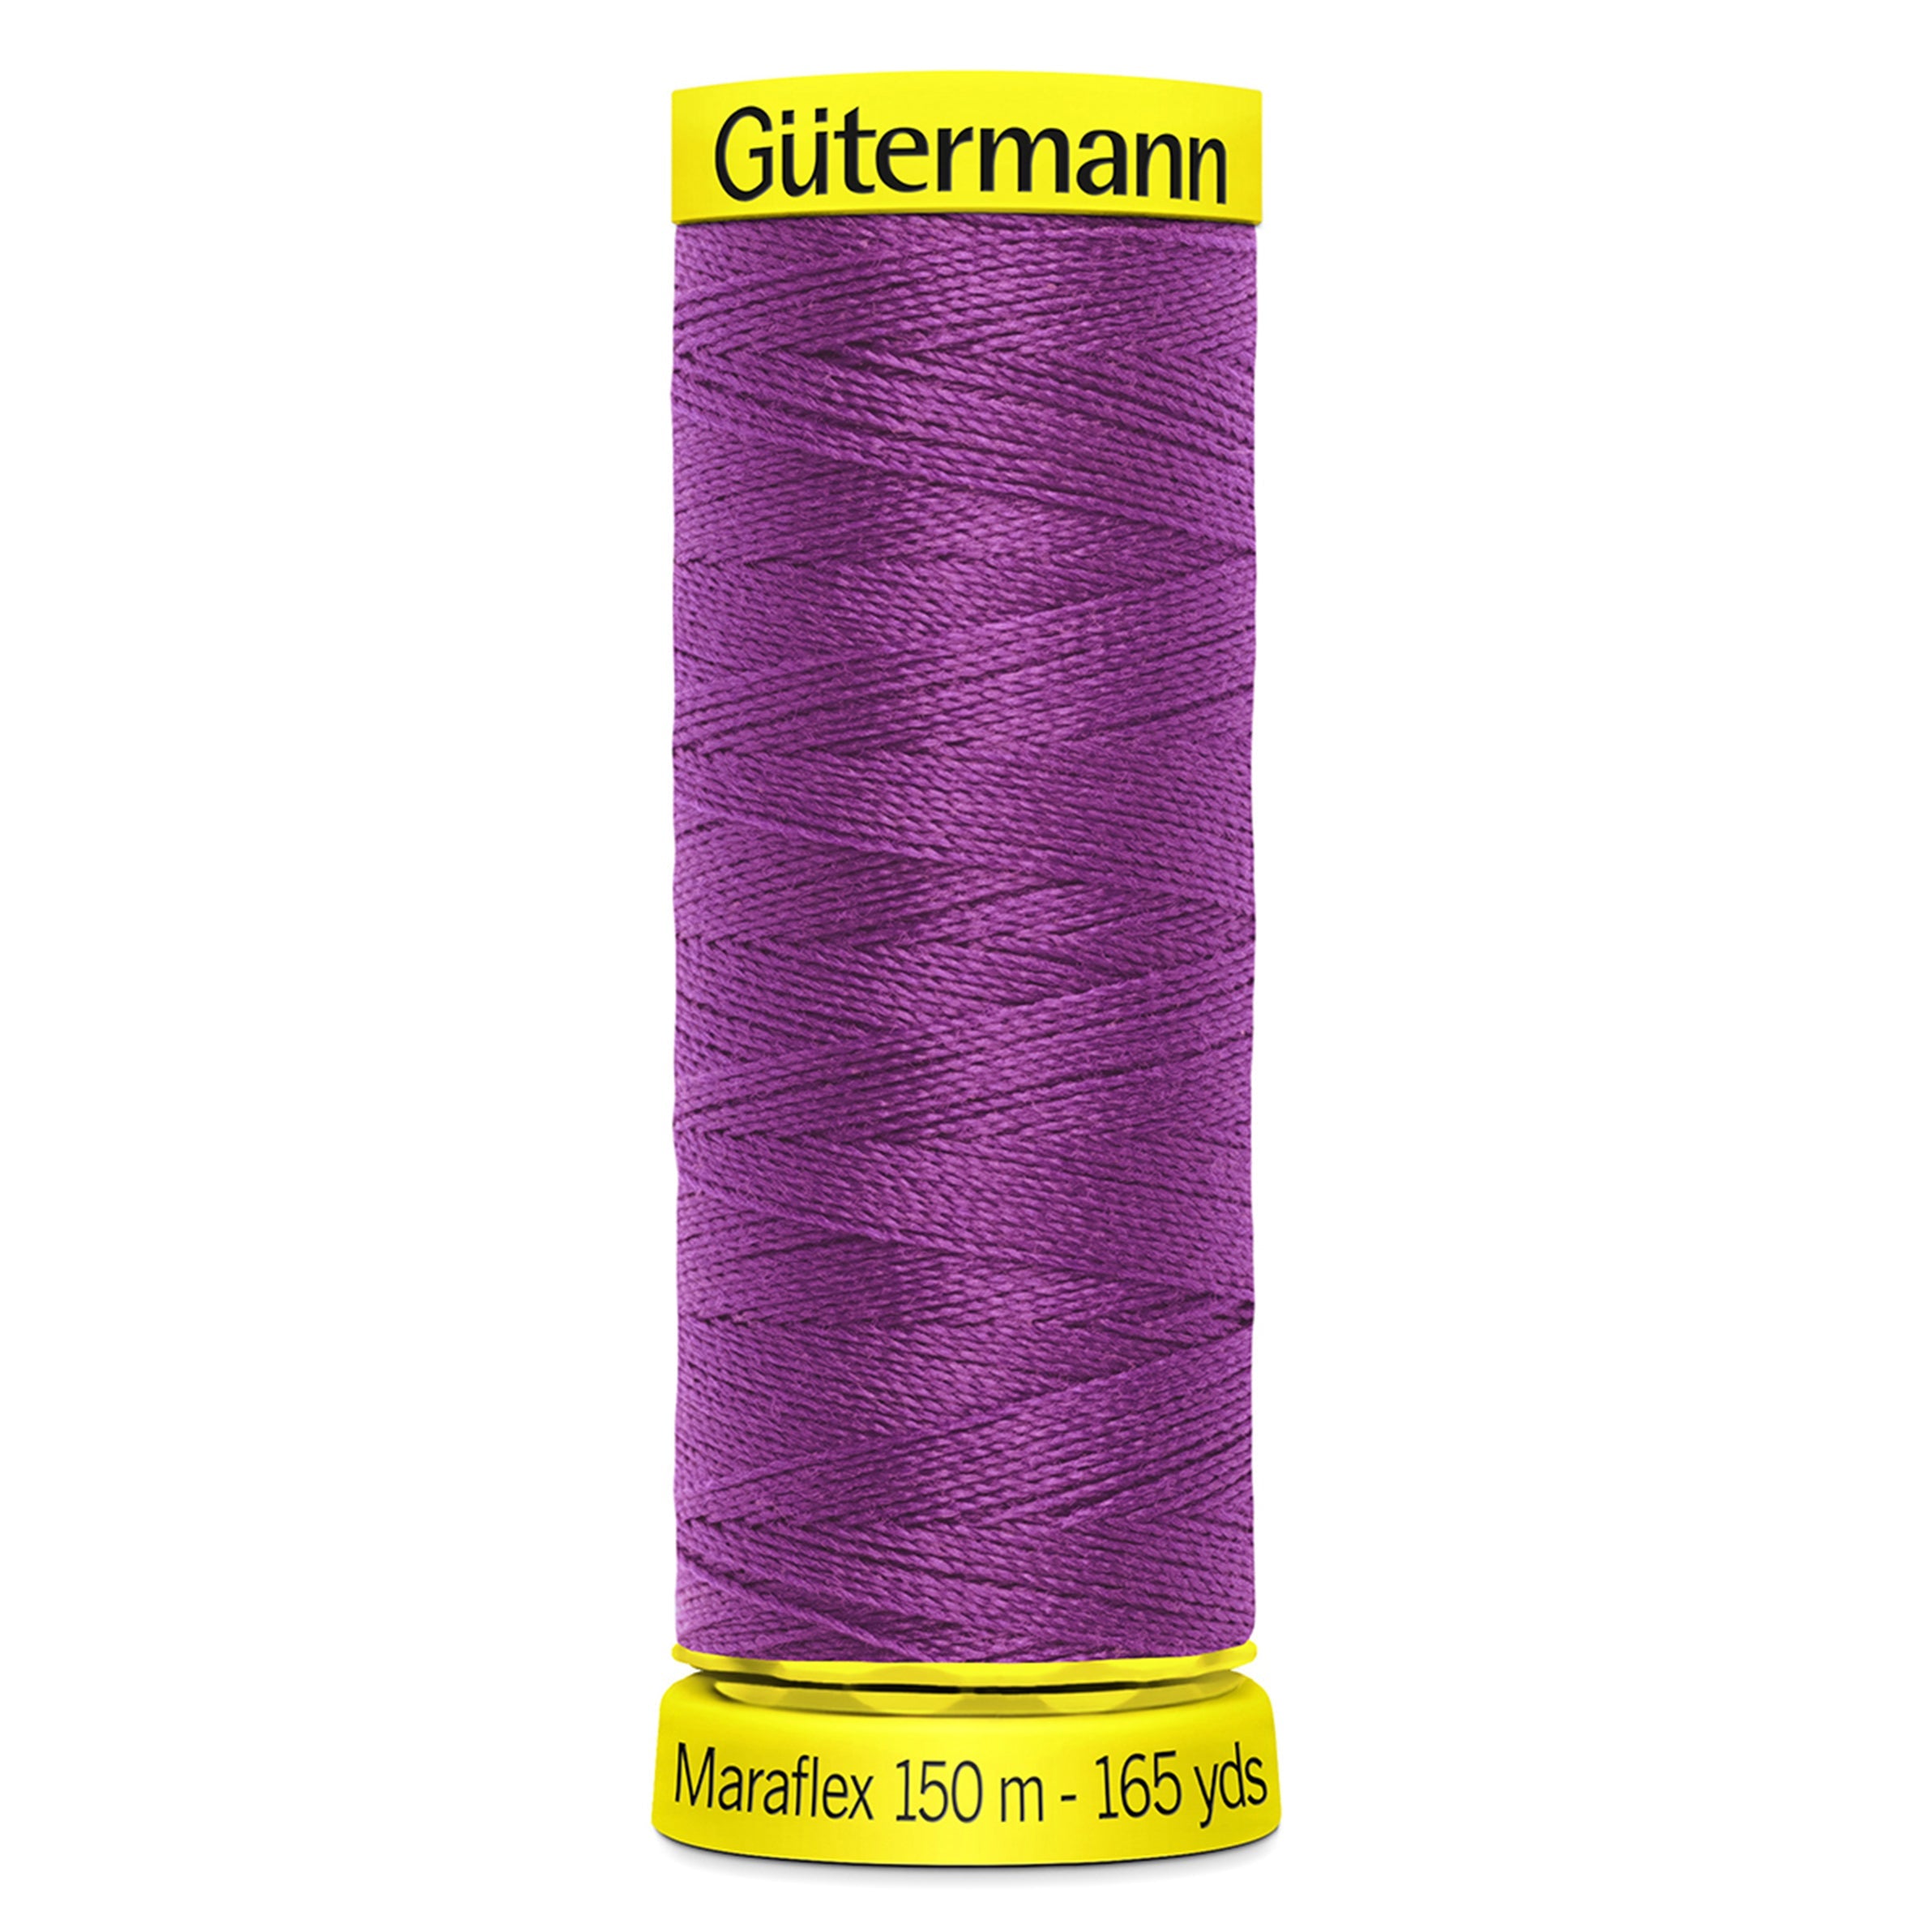 Gutermann Maraflex Stretchy Sewing Thread 150m colour 321 Dark Cerise from Jaycotts Sewing Supplies